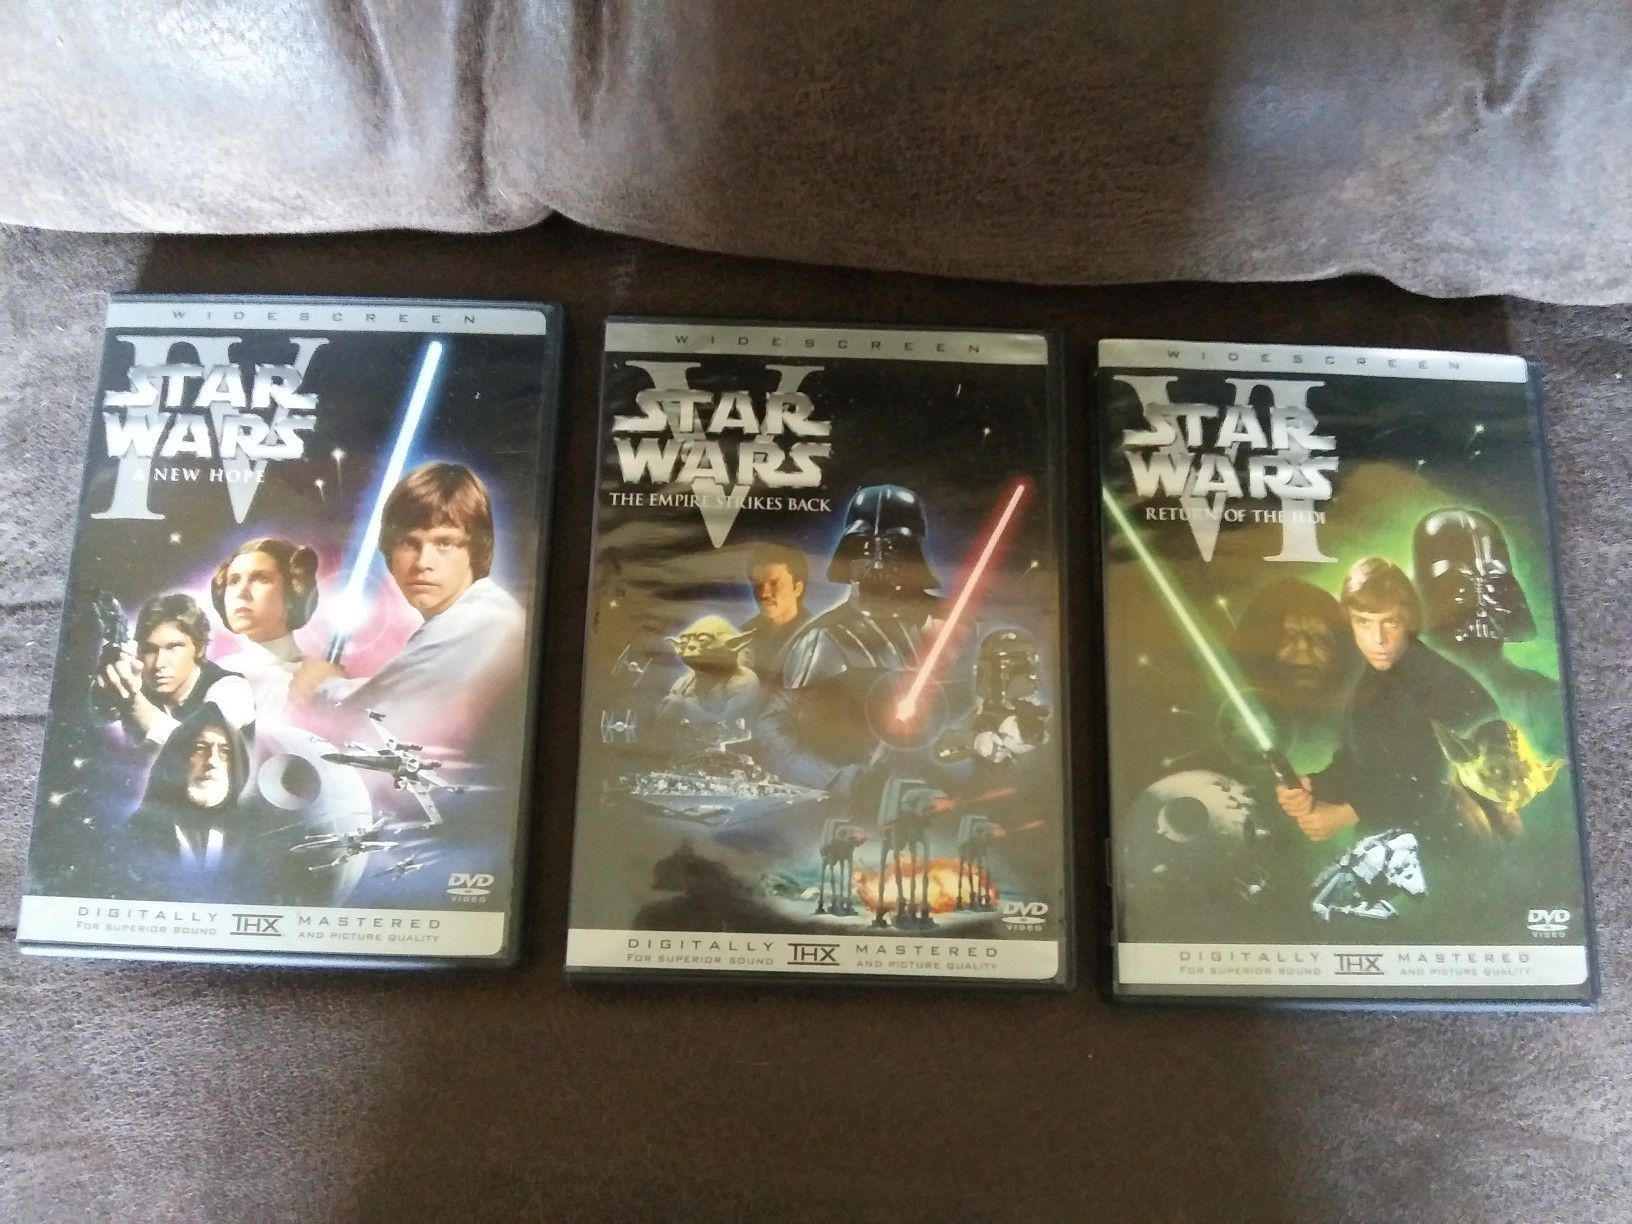 3 Star Wars DVDs ($6 total for all 3 DVDs)